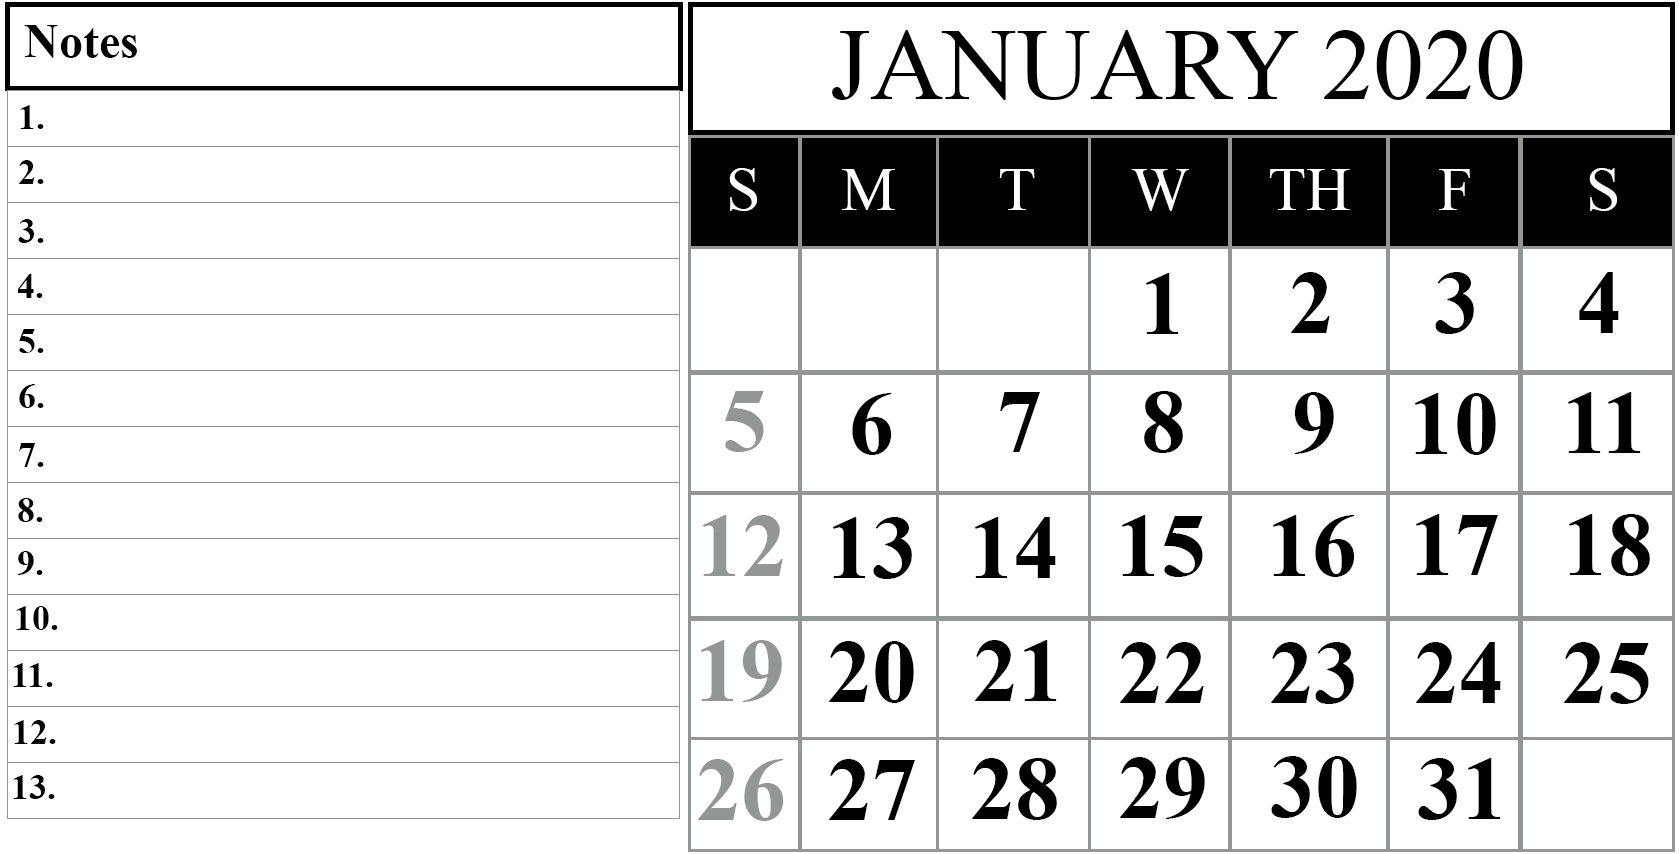 January 2020 Printable Calendar Template #2020Calendars-January 2020 Calendar Png